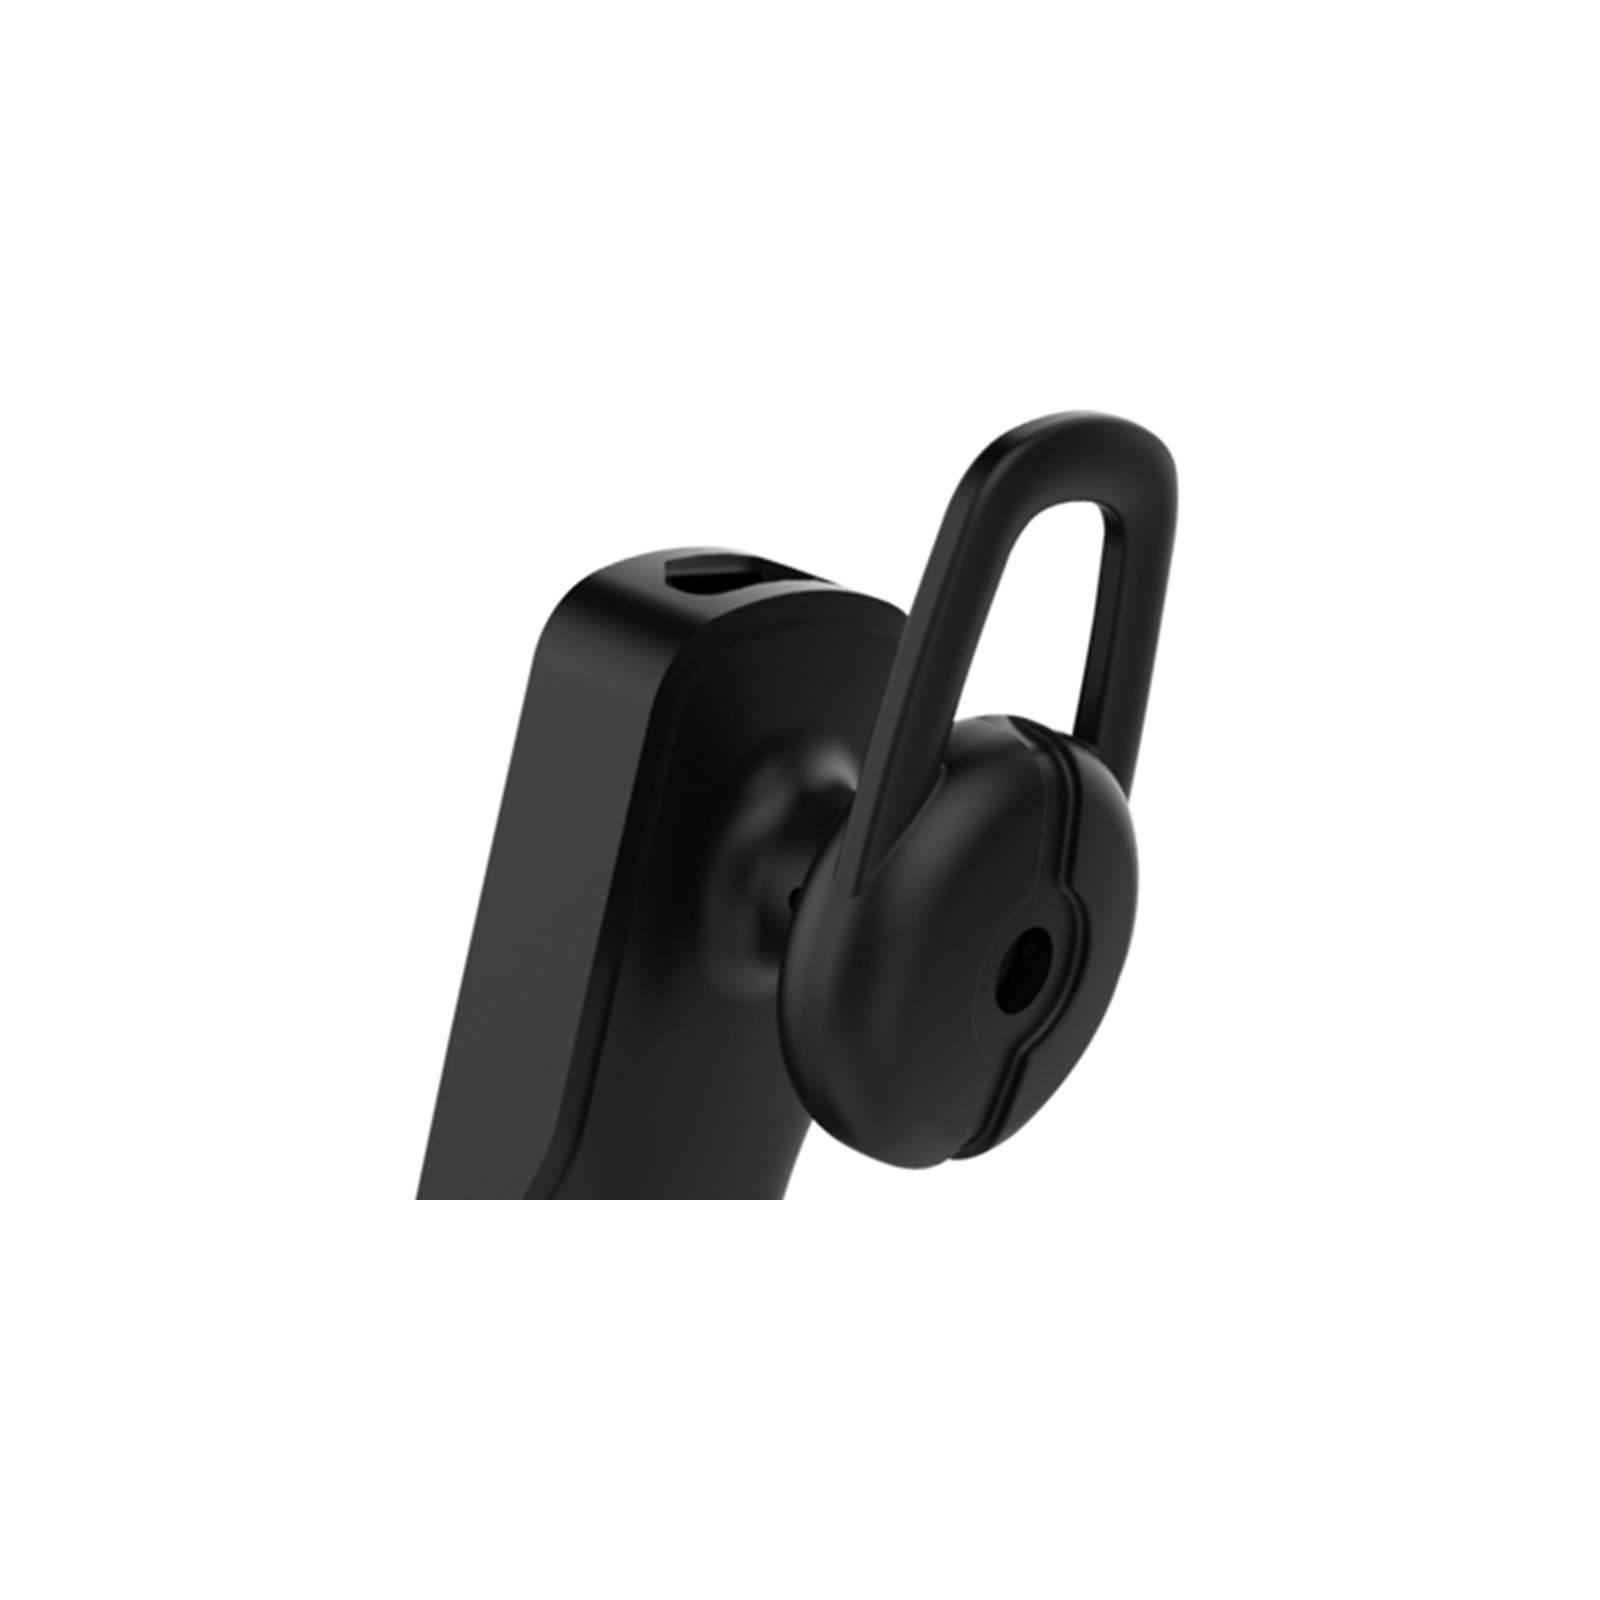 Bluetooth-гарнитура Jellico S200 Black (RL050511) изображение 4